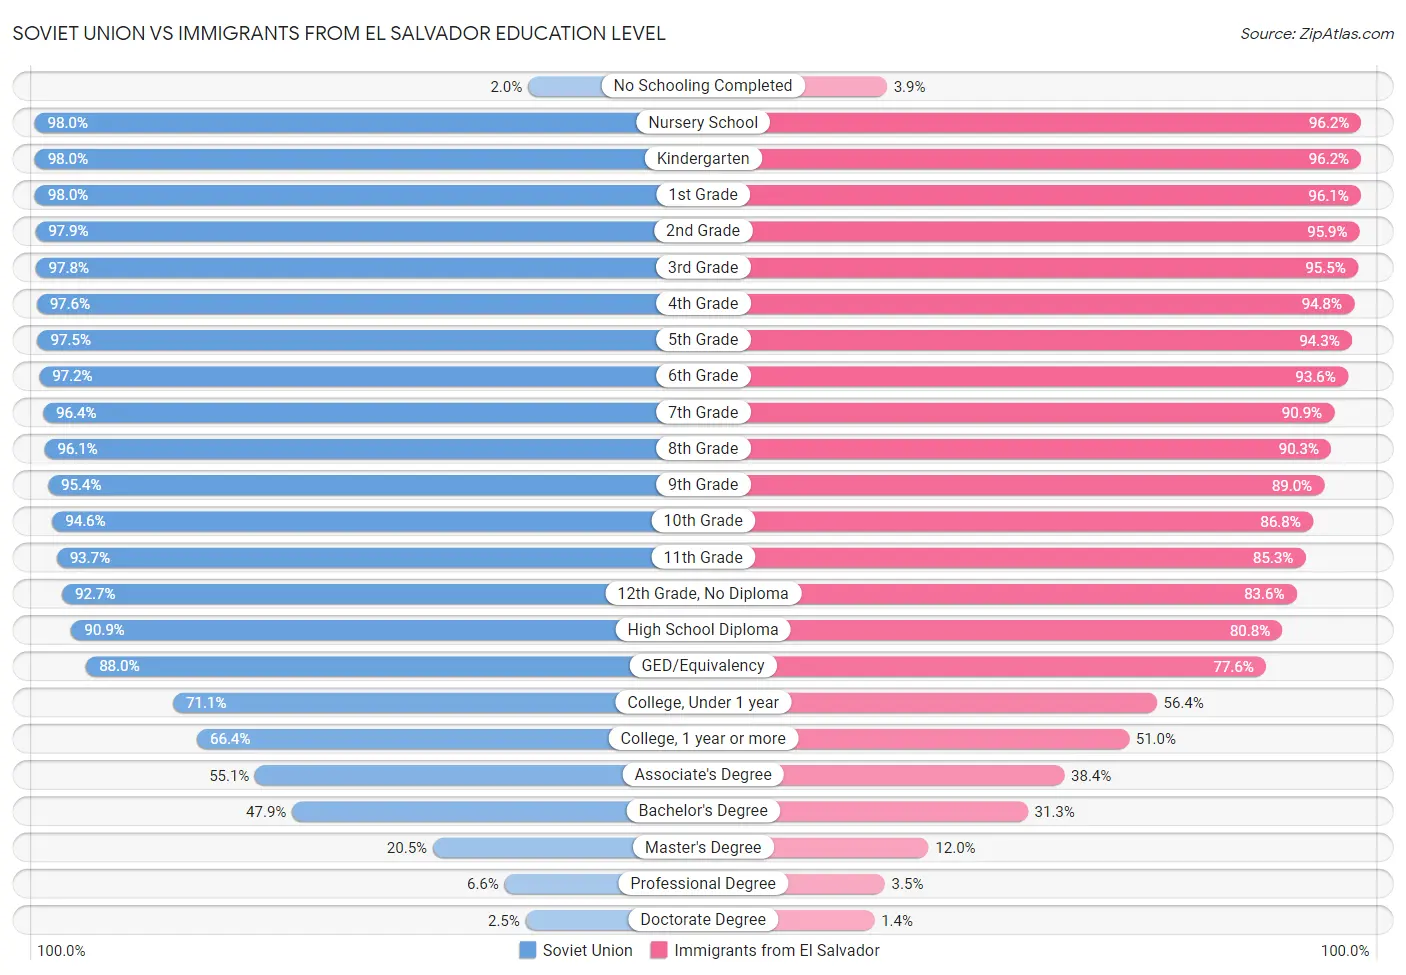 Soviet Union vs Immigrants from El Salvador Education Level